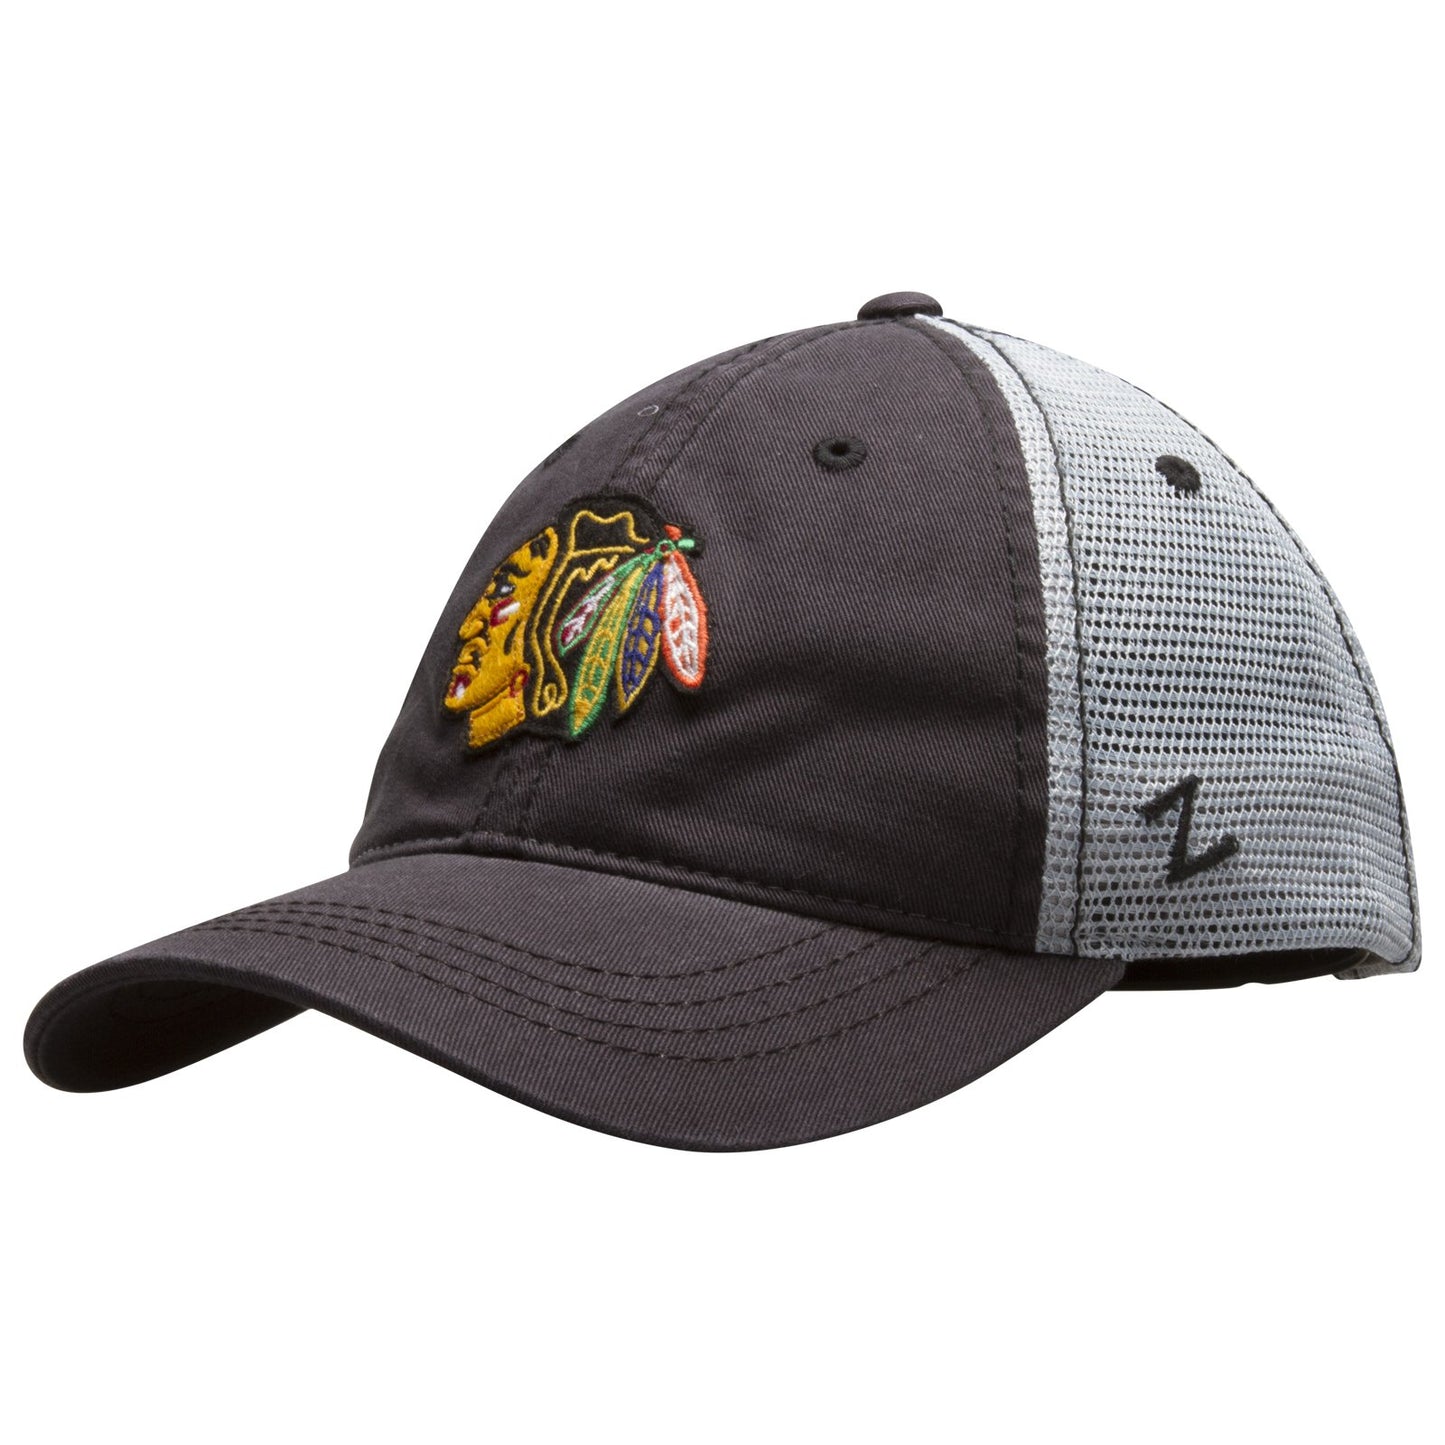 ZHATS NHL Chicago Blackhawks Men's Black/Gray Smokescreen Mesh Hat